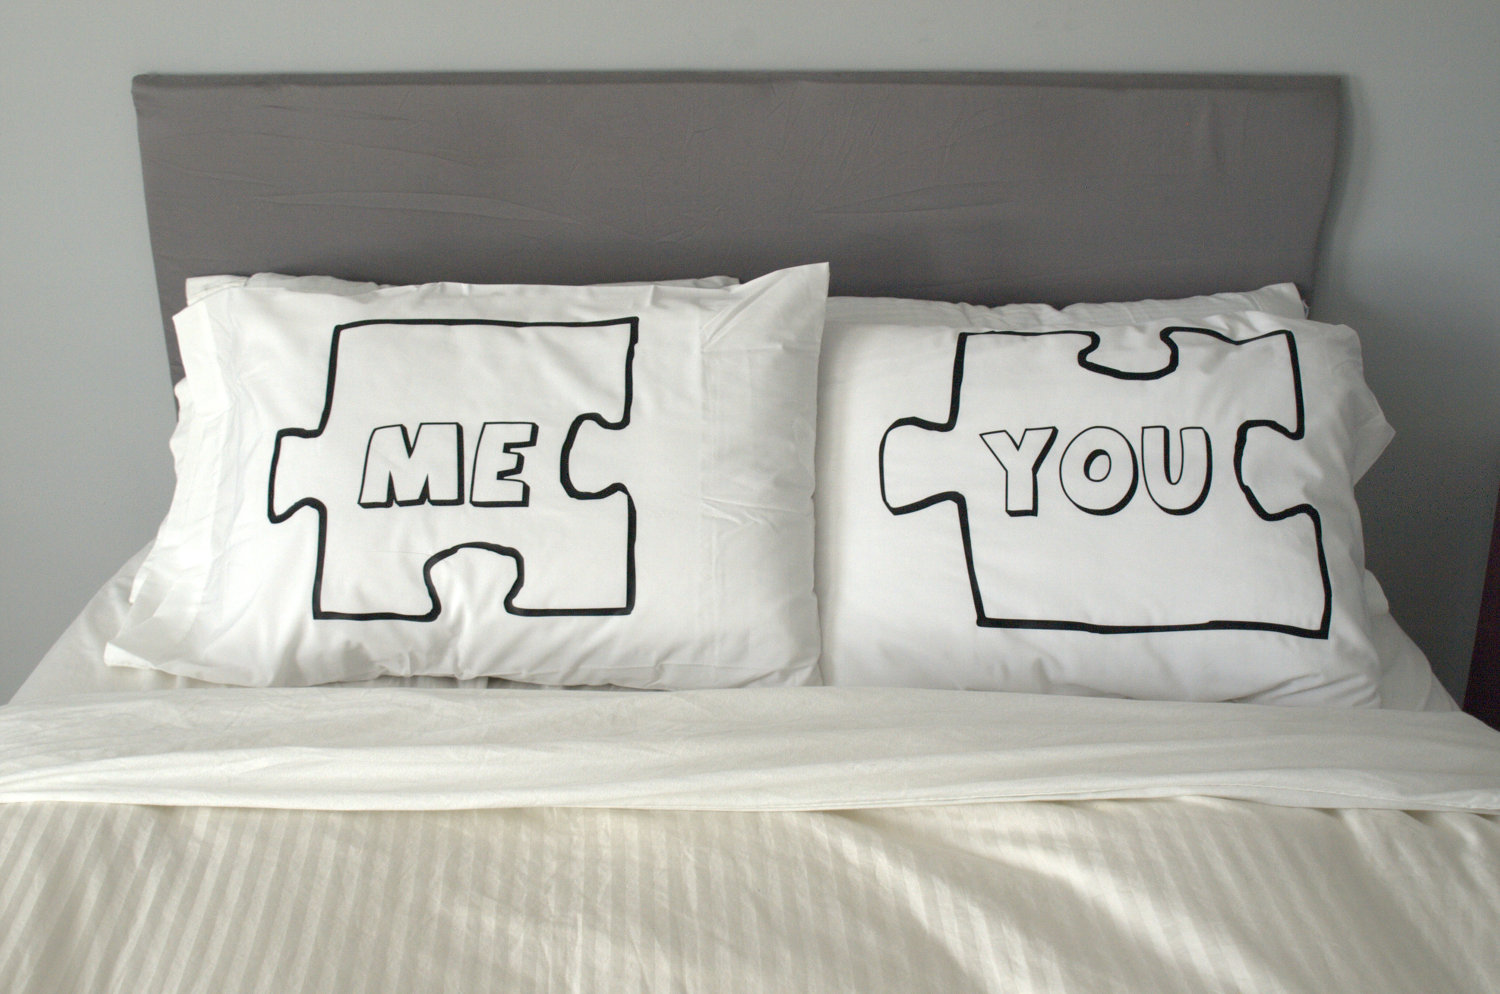 Lovely pillows3